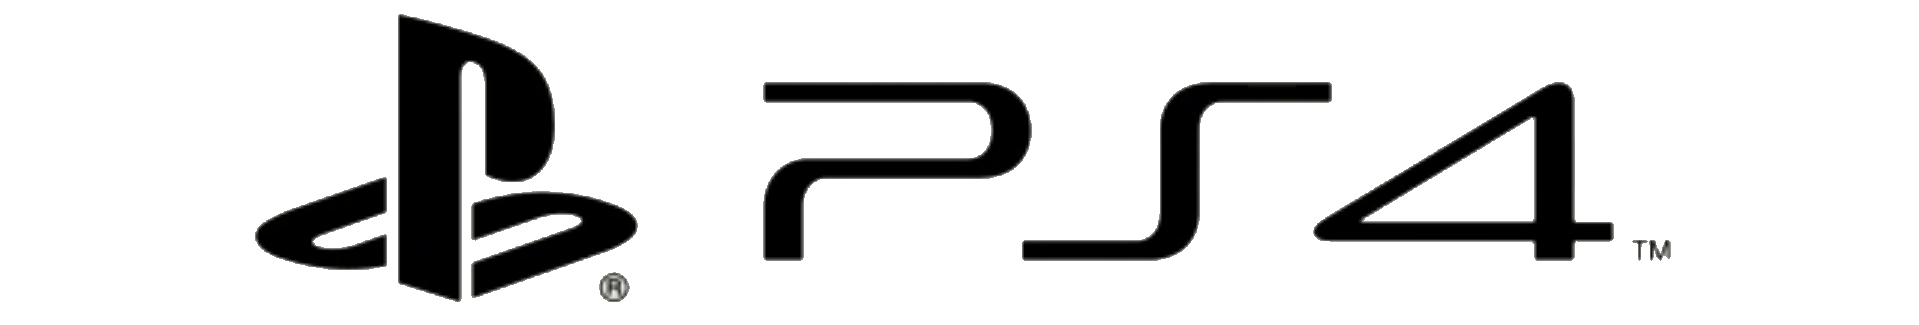 PS 4 Logo - Ps4 Logos